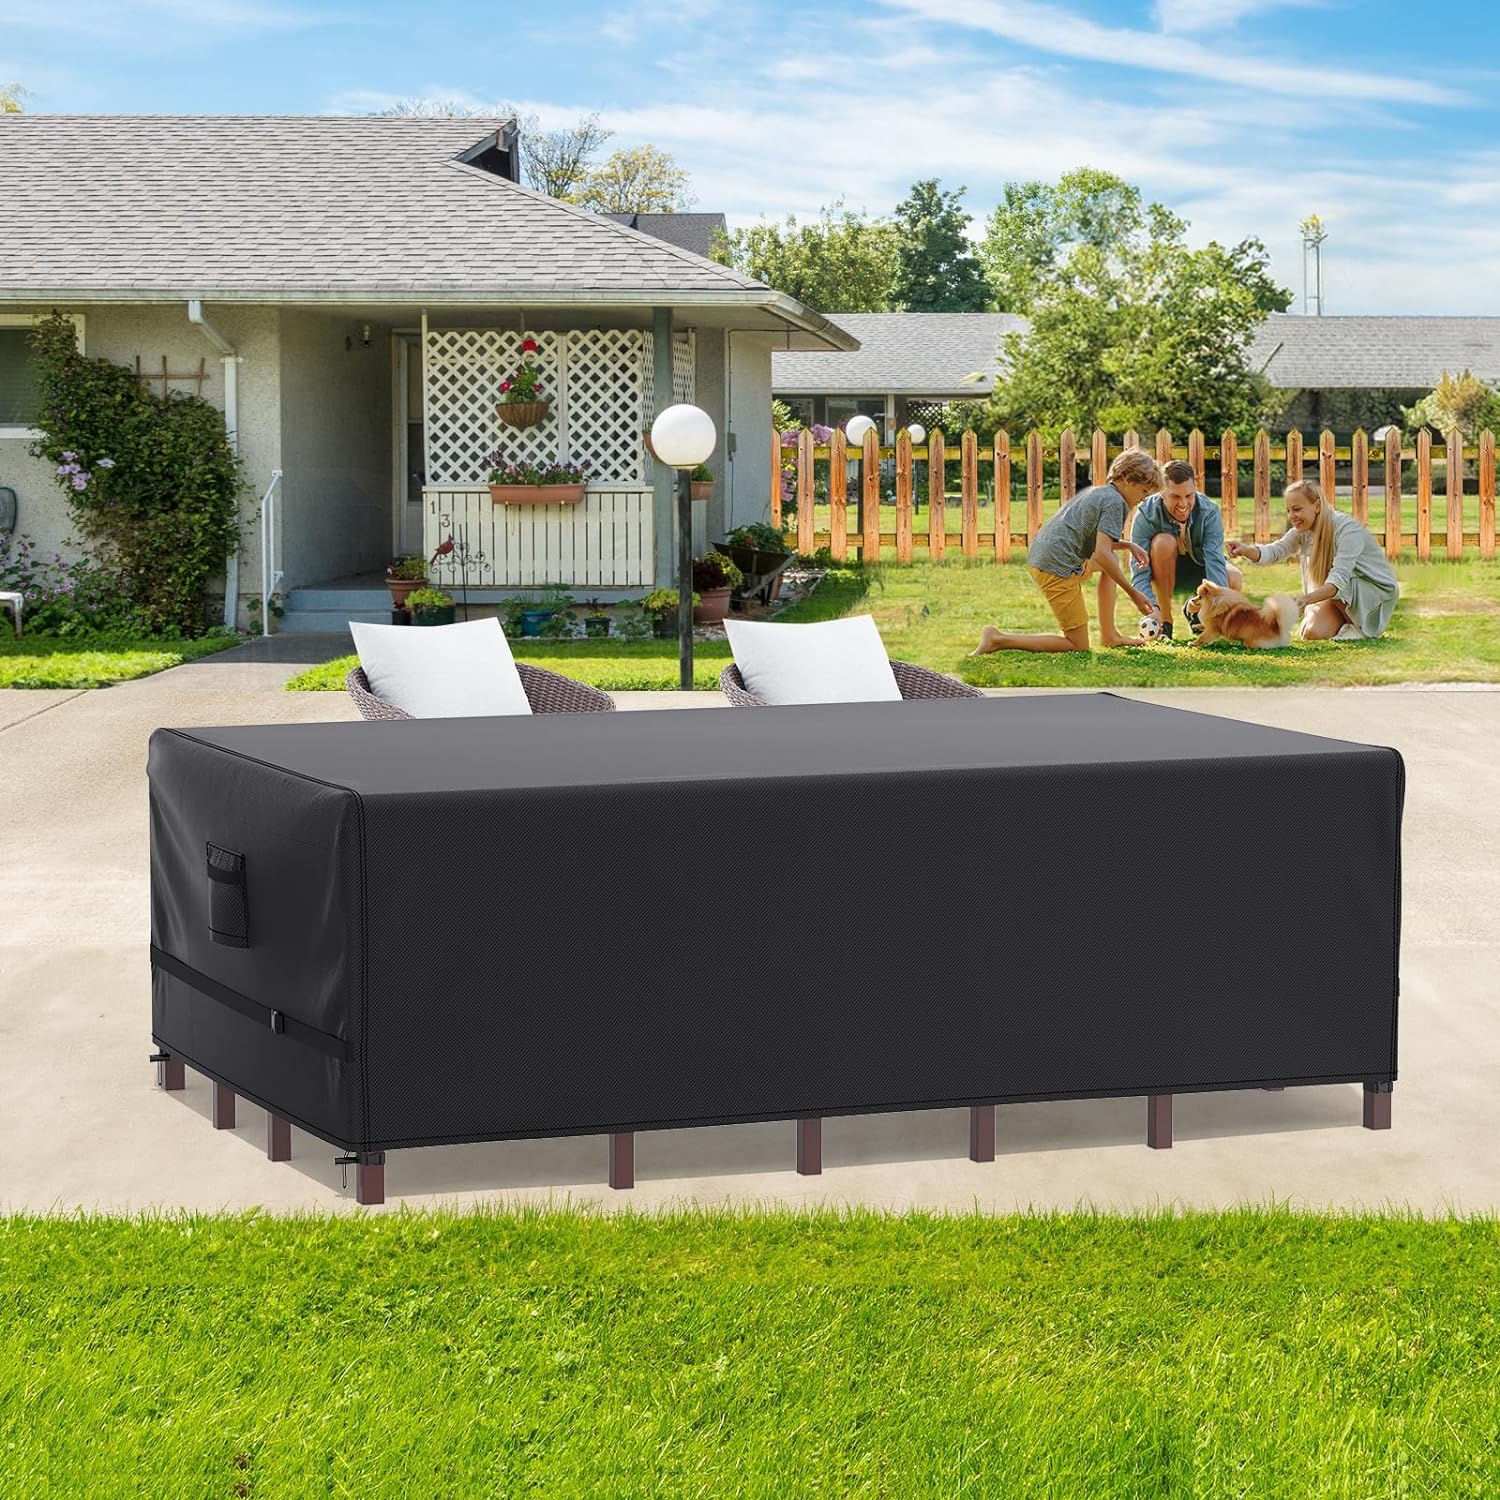 Patio Furniture Covers, Gorpche Outdoor Furniture Covers Waterproof - UK GEMS